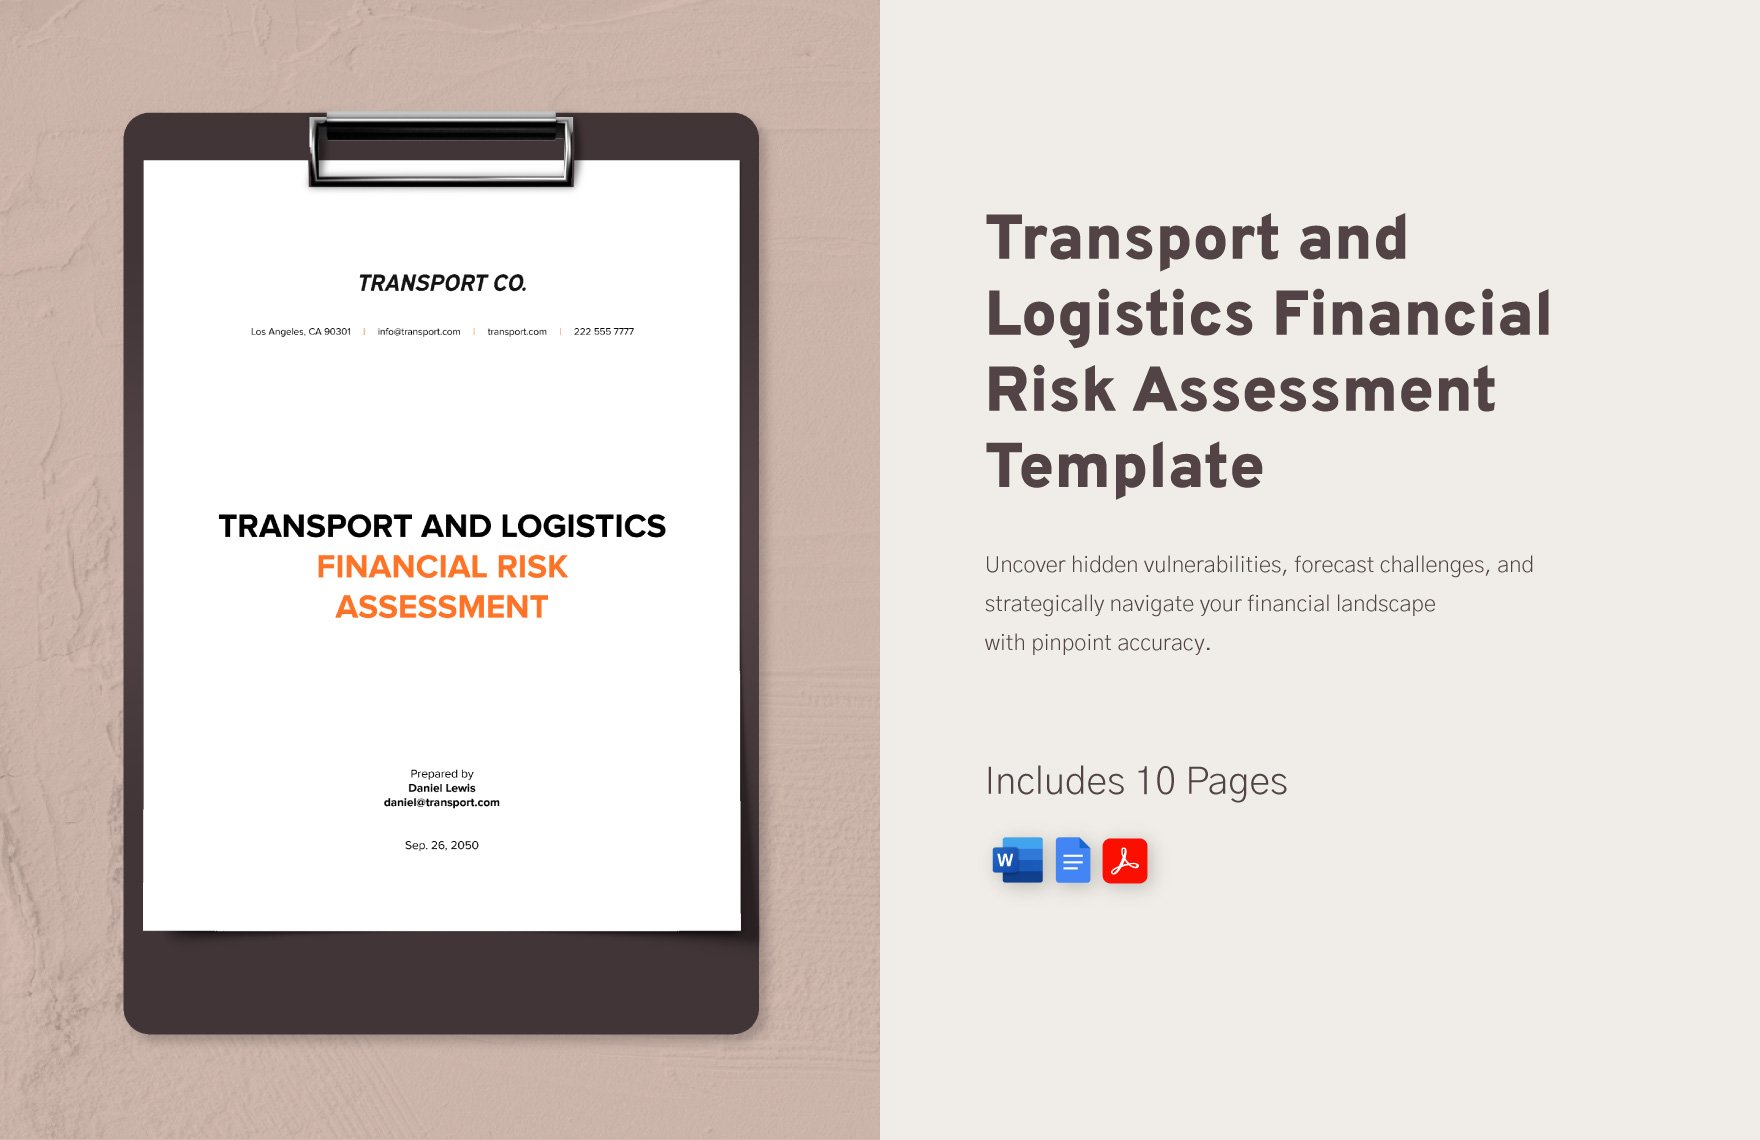 Transport and Logistics Financial Risk Assessment Template